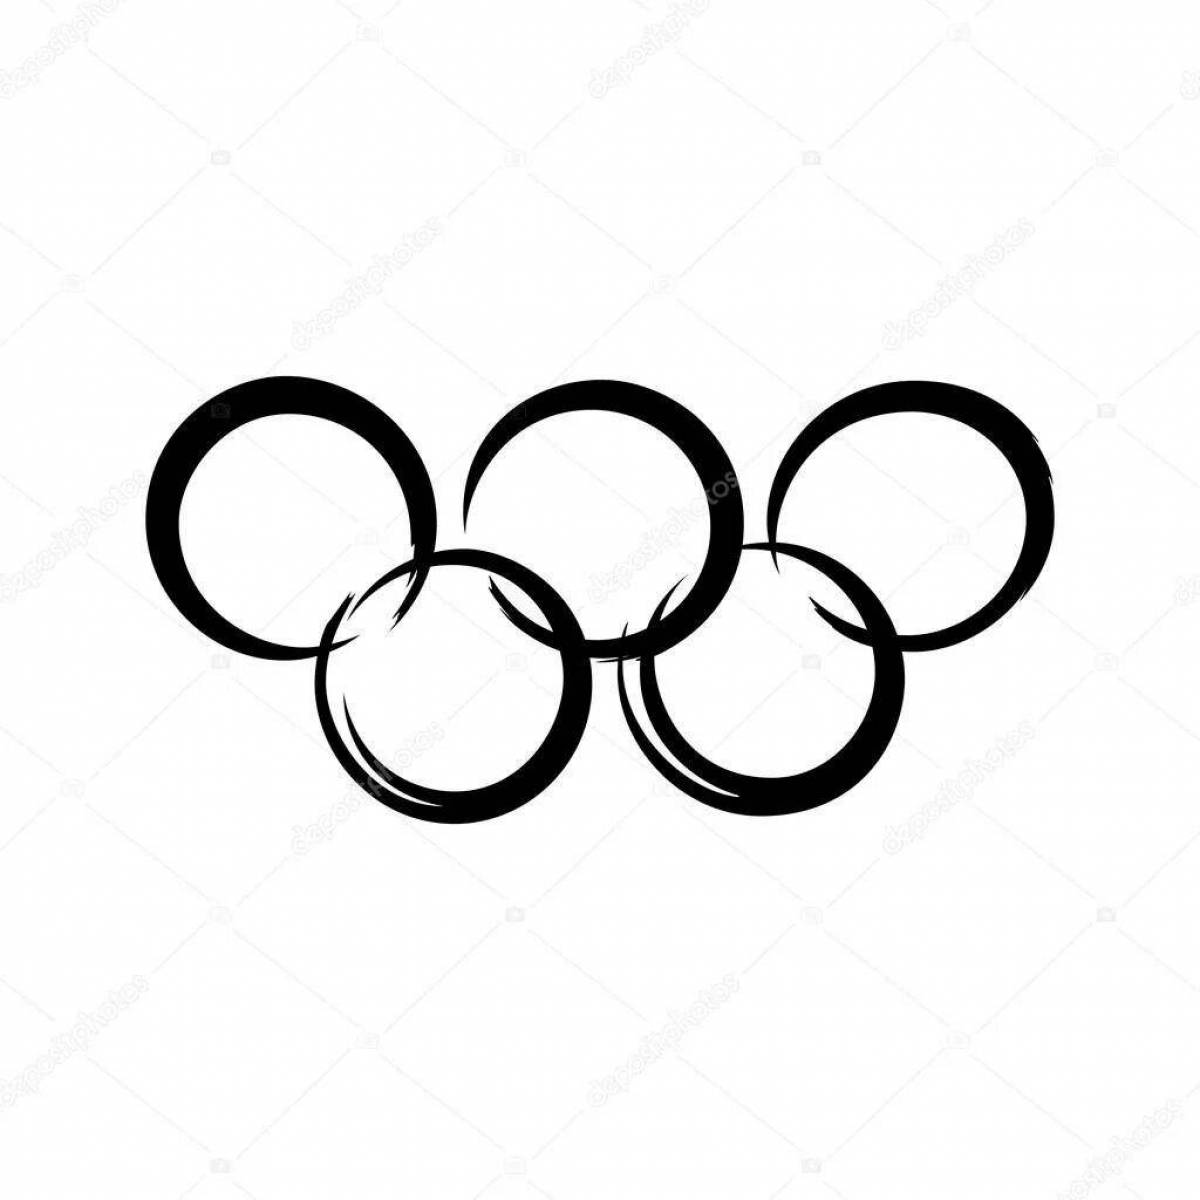 Coloring ring of joyful olympic games